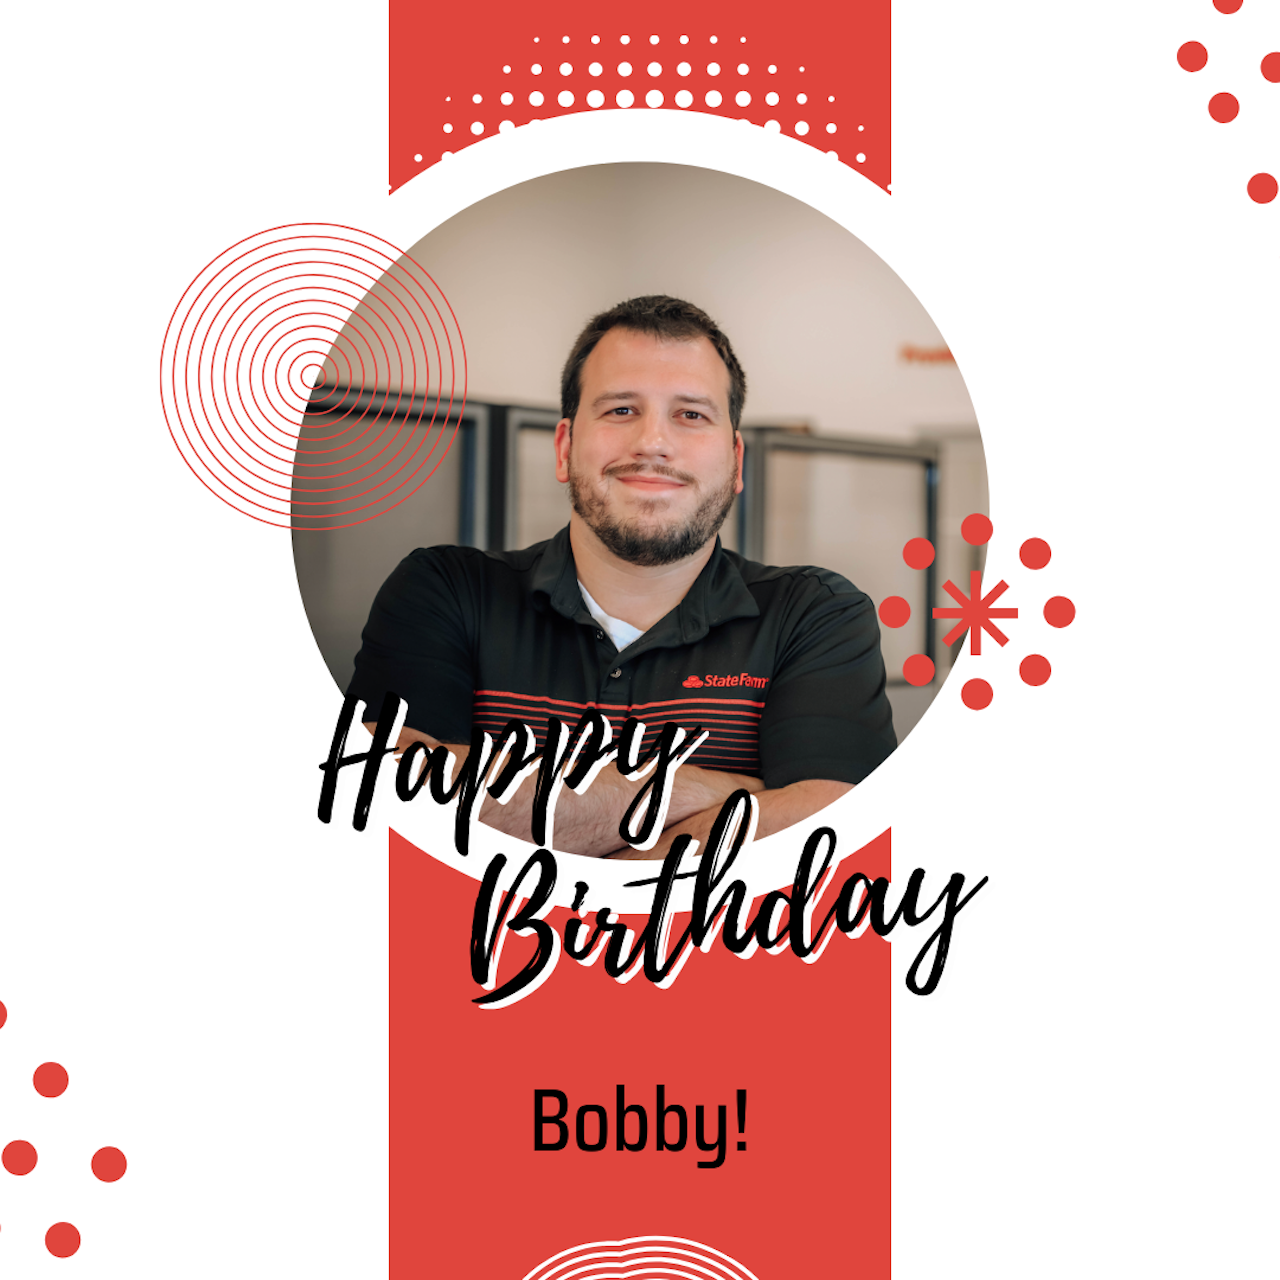 Happy birthday, Bobby! Kim Benton - State Farm Insurance Agent Millsboro (302)934-9393